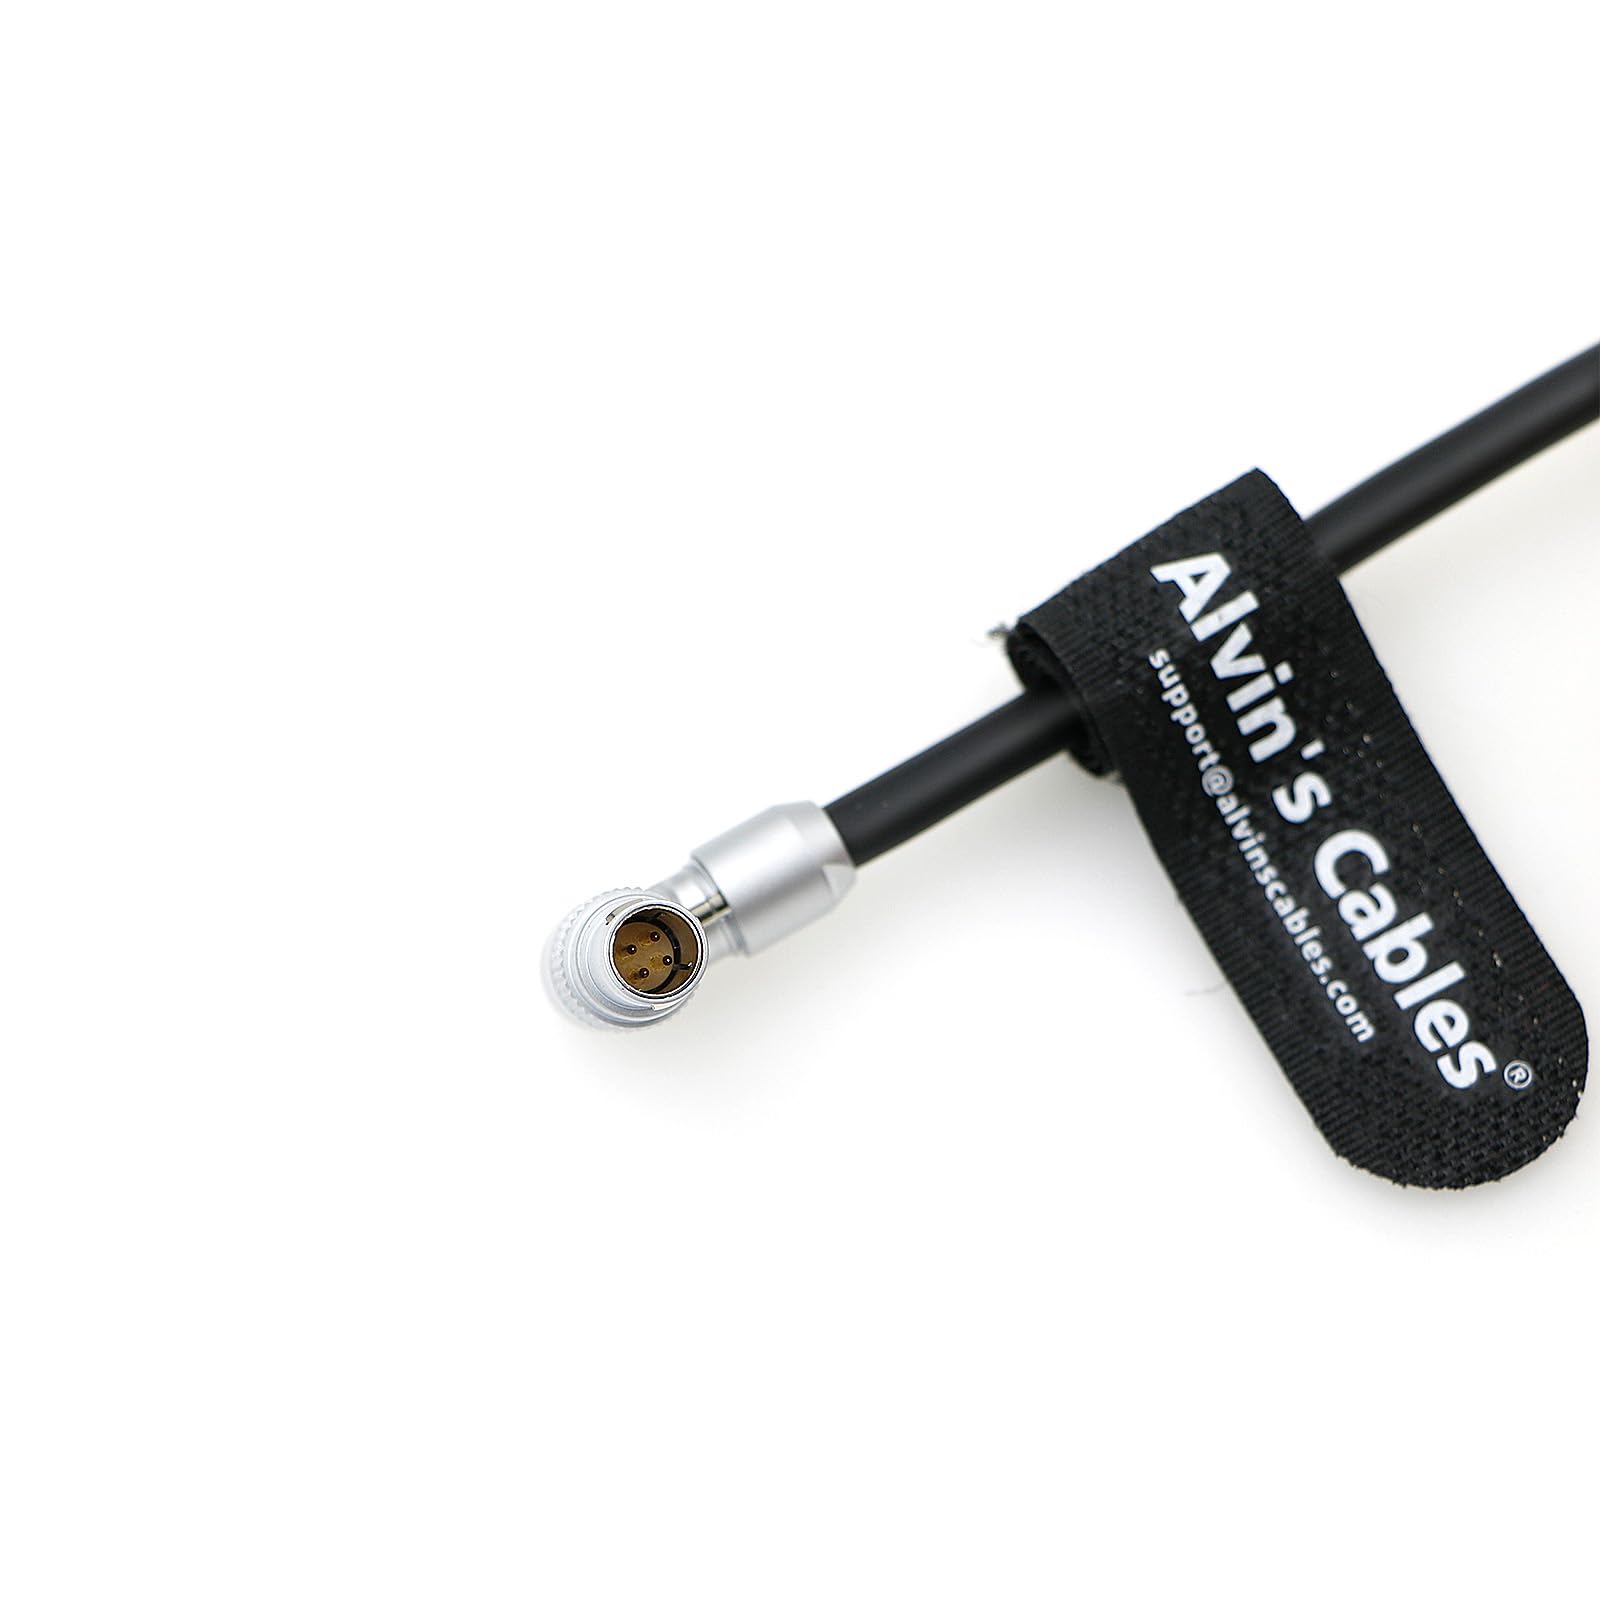 Alvin’s Cables Preston 4742 Control Cable for CineTape Measure to Preston MDR-3| MDR-4 6 Pin to 4 Pin 60cm| 23.6in